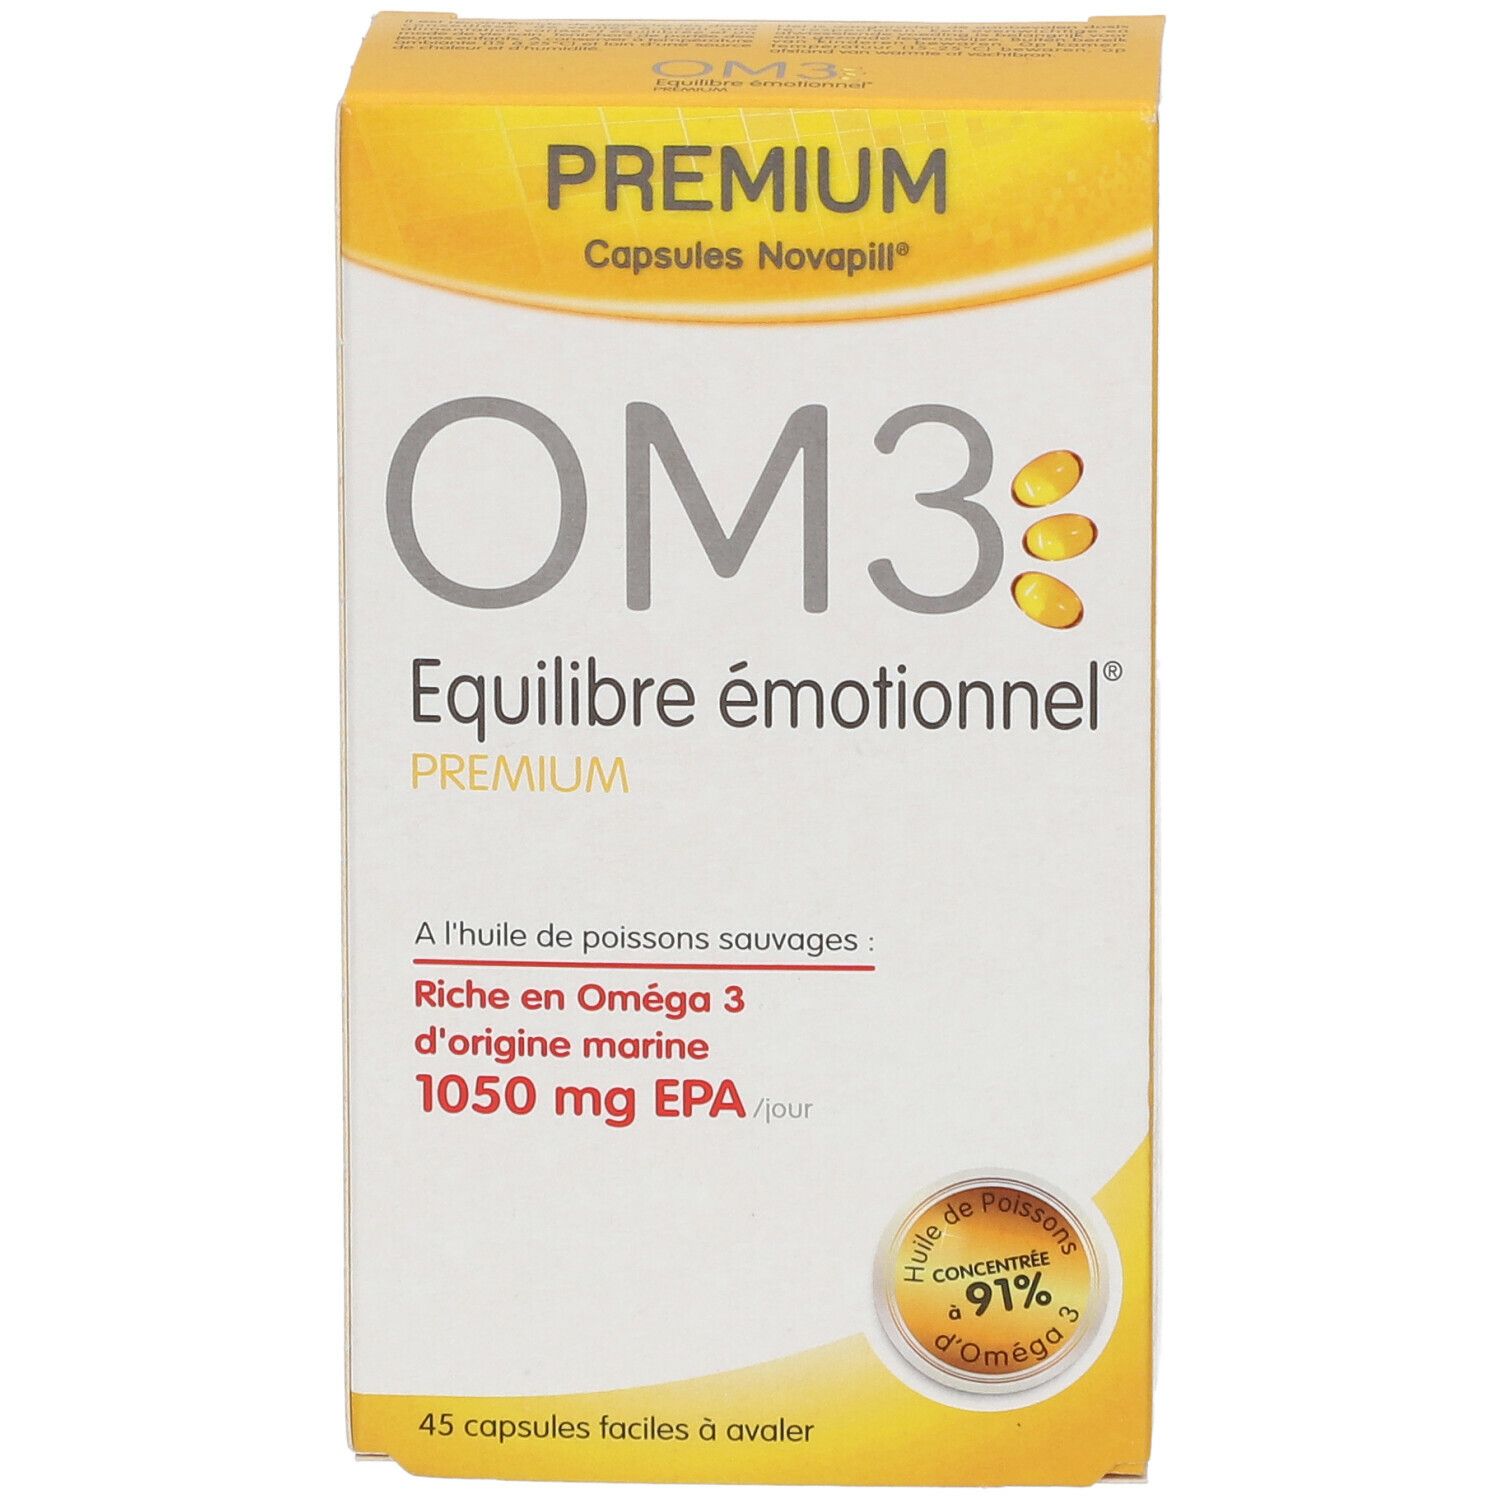 Premium Novapill® capsules OM3 Equilibre émotionnel®